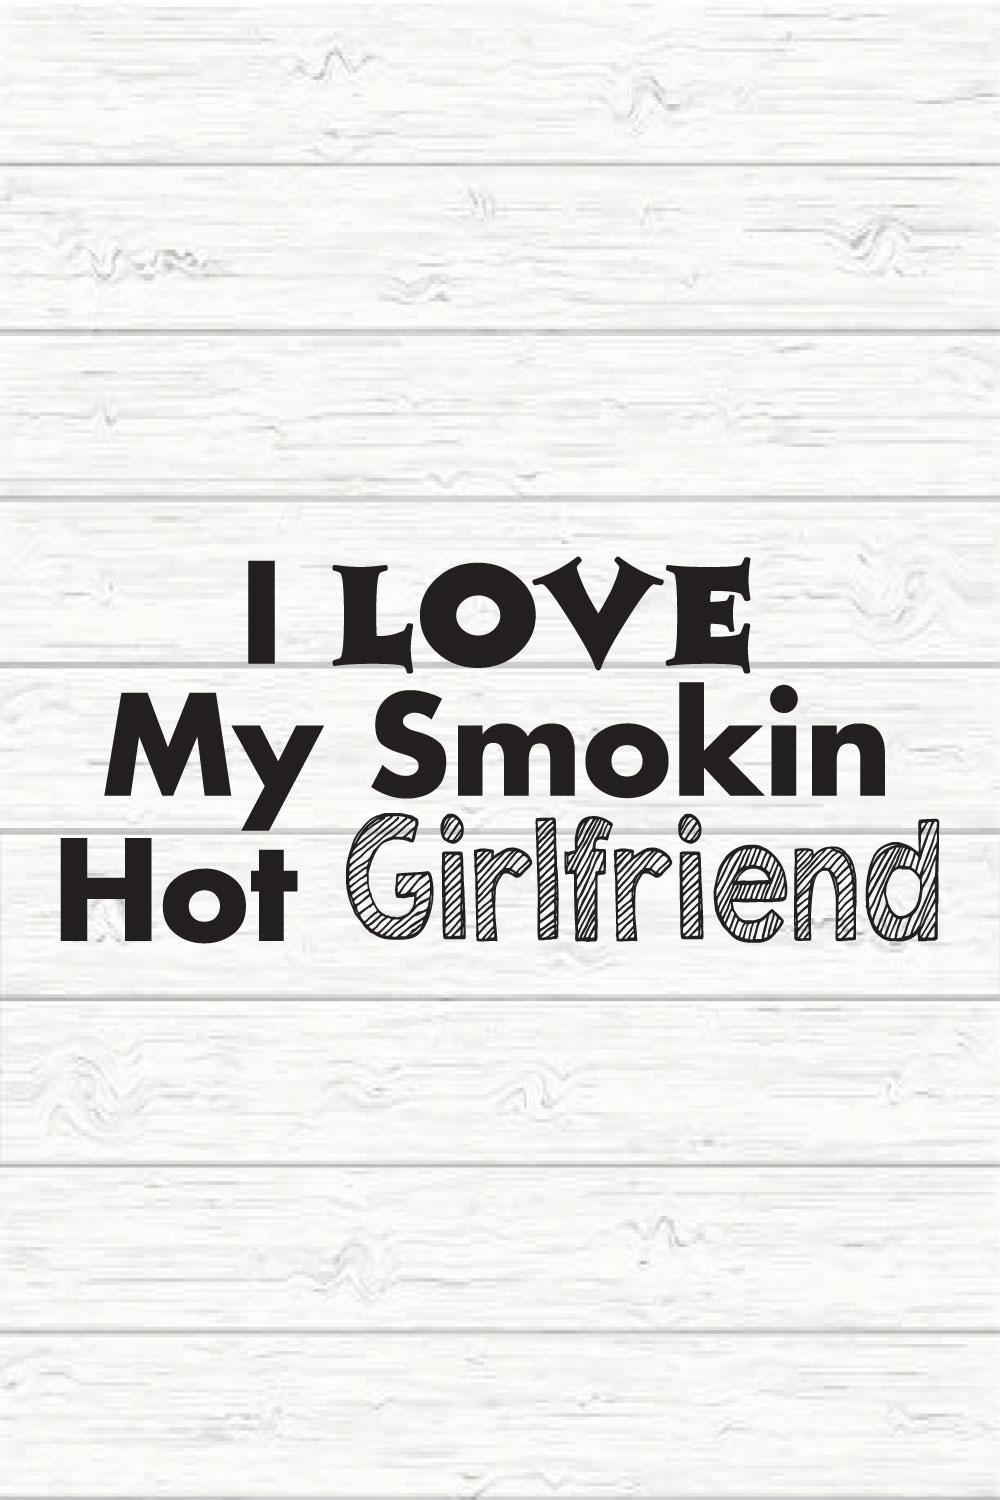 I Love My Smokin Hot Girlfriend Svg pinterest preview image.